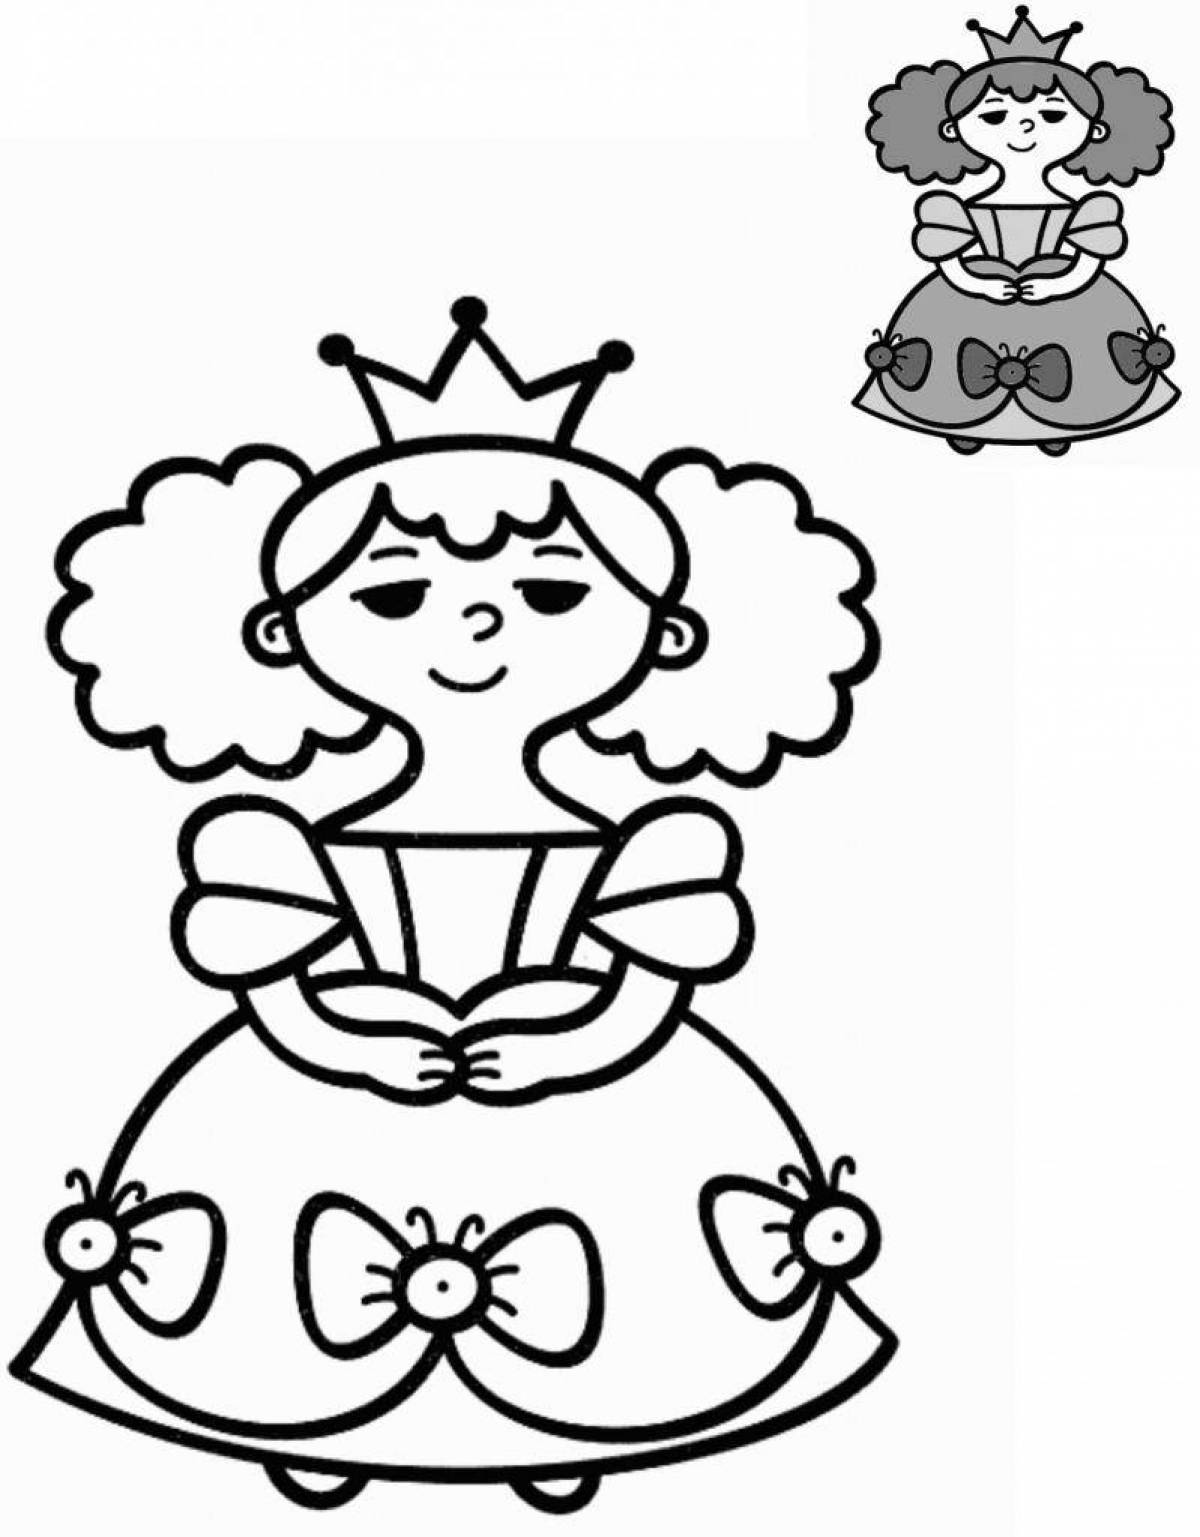 Яркая раскраска принцесса с короной